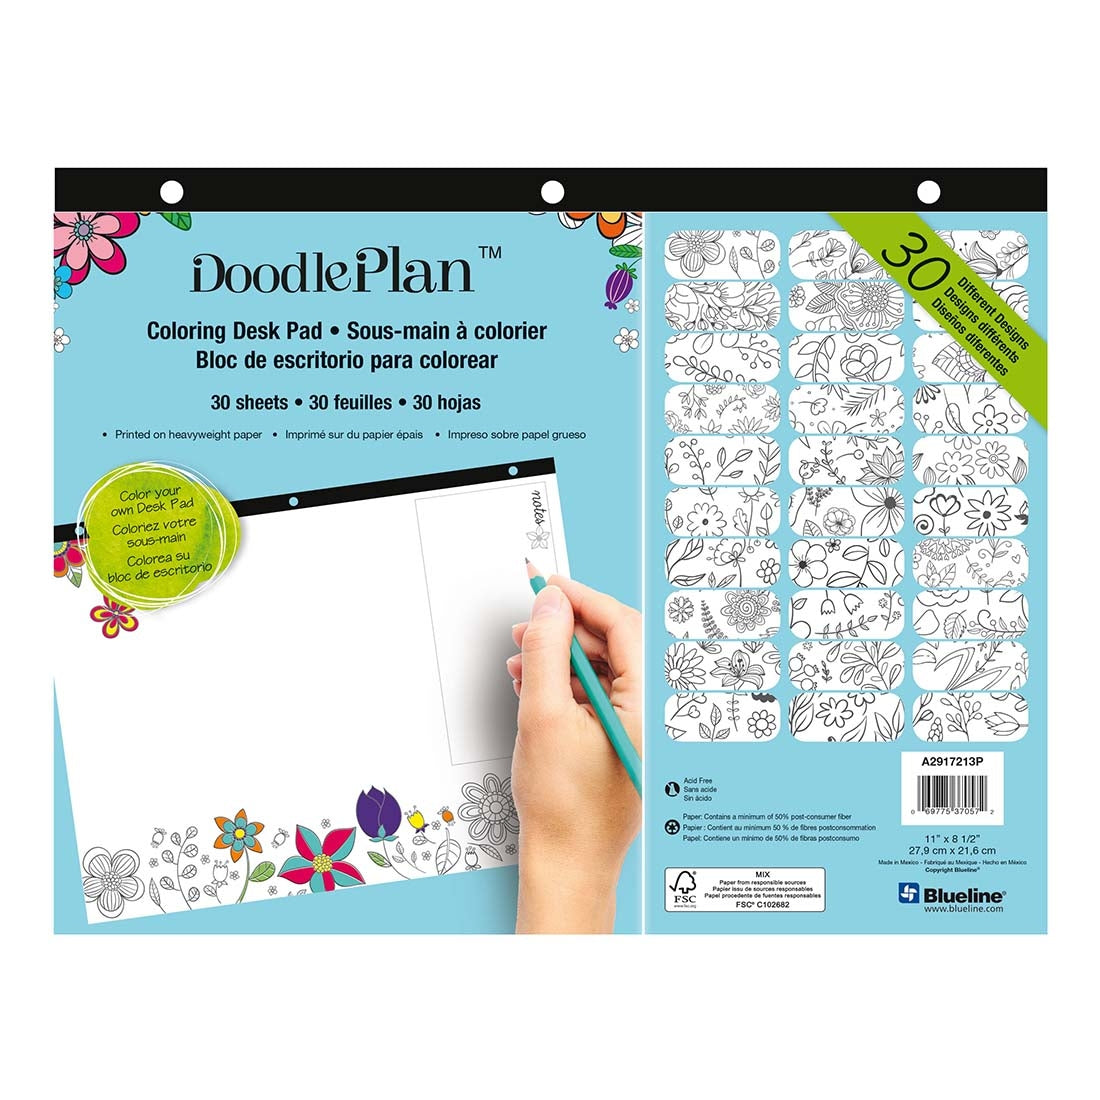 DoodlePlan Colouring Desk Pad - Undated#colour_garden